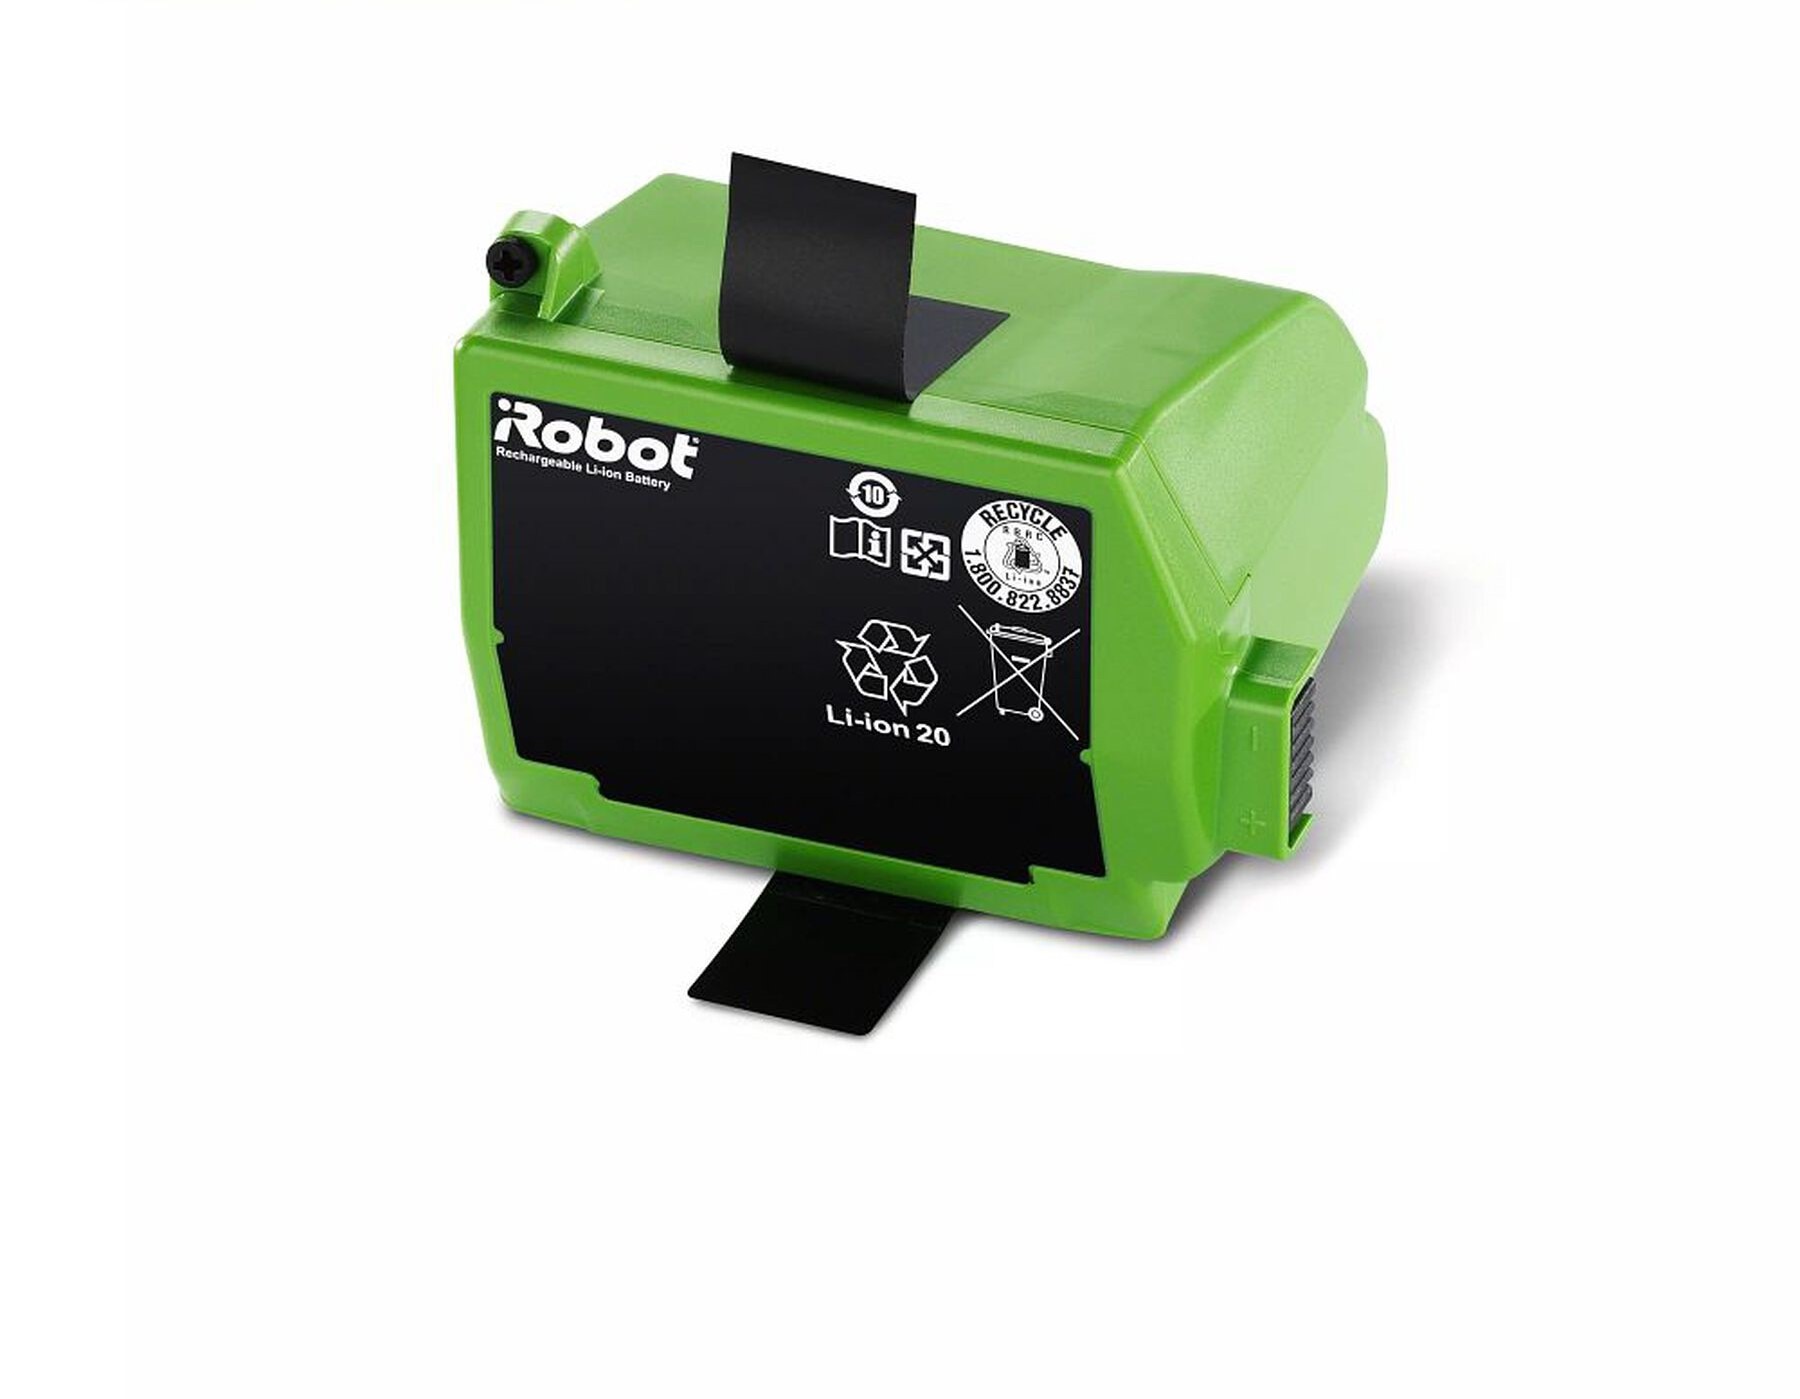 Irobot s 3,300mAh Lithium Ion Battery Stofzuiger accessoire